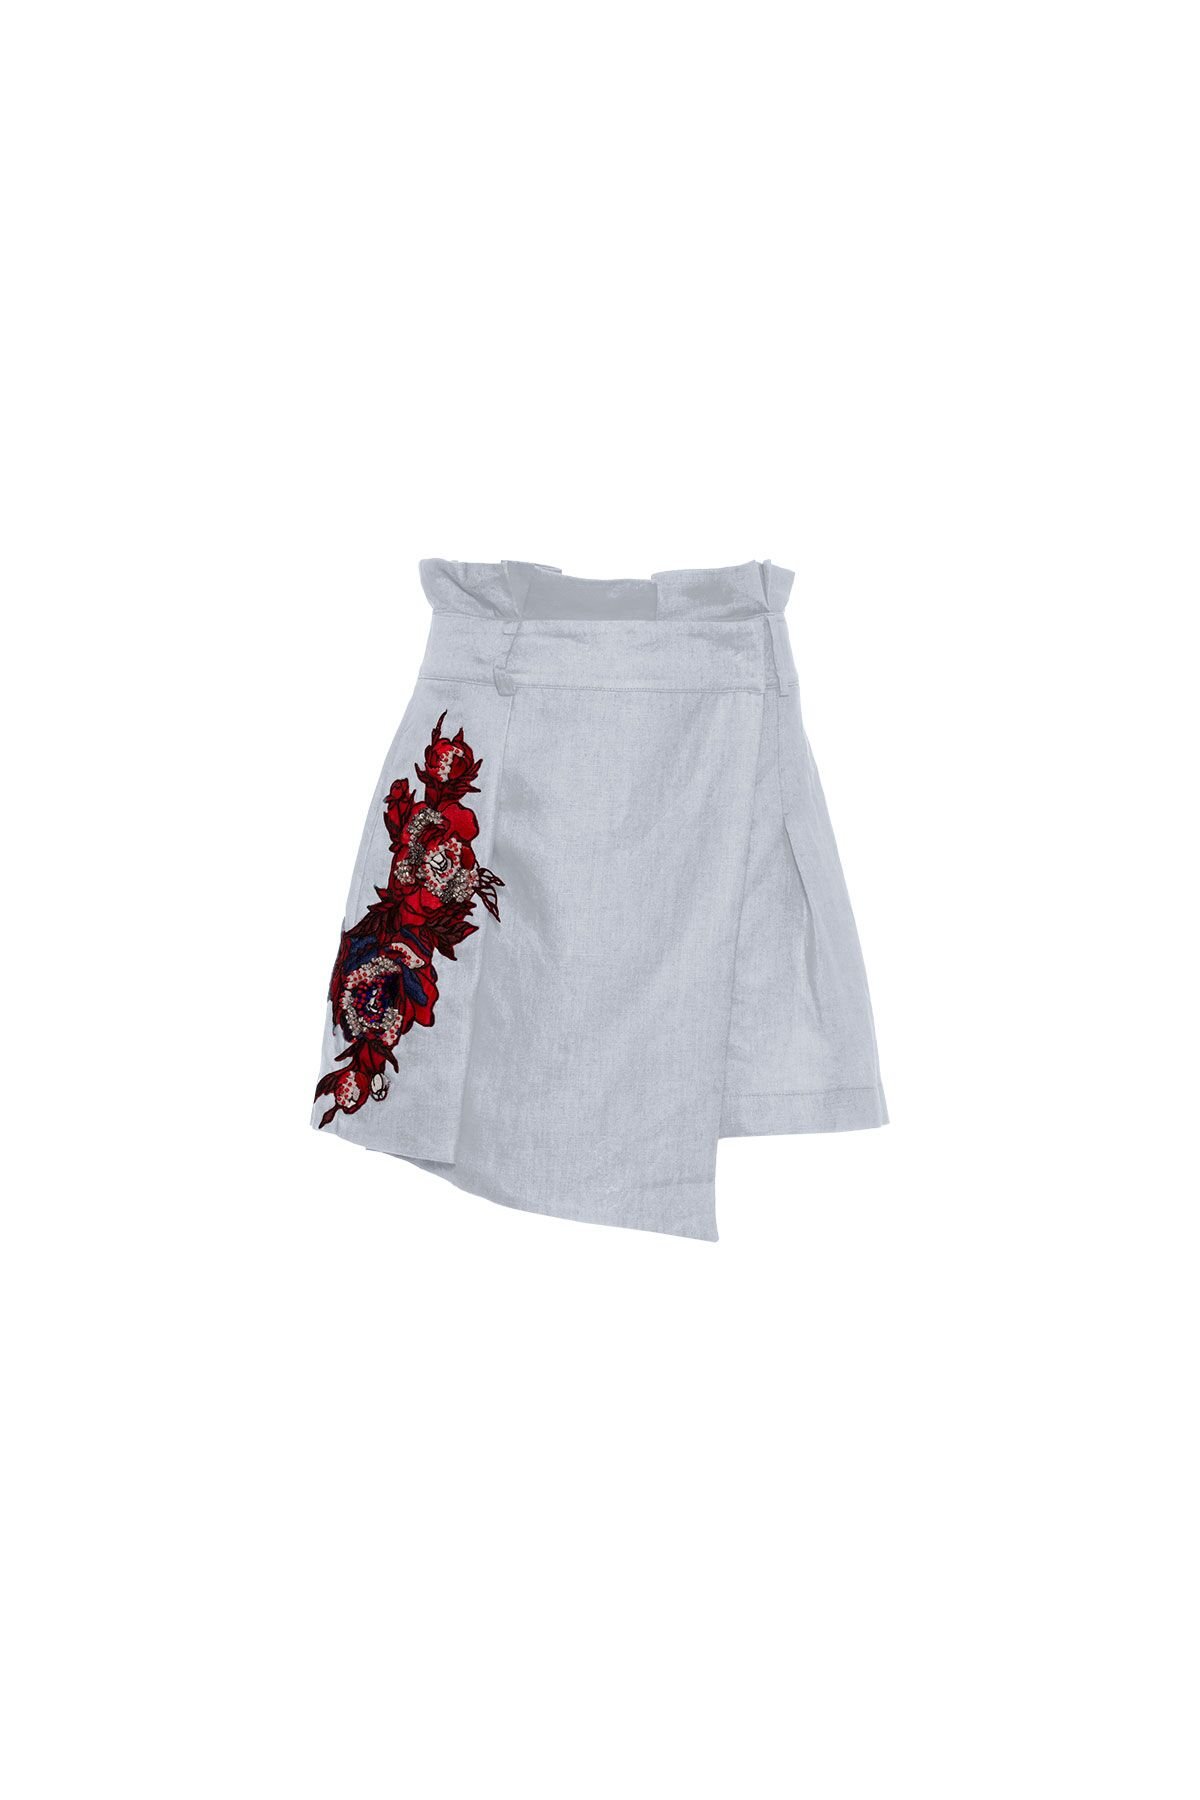 Embroidery Detailed Baby Blue Linen Short Skirt